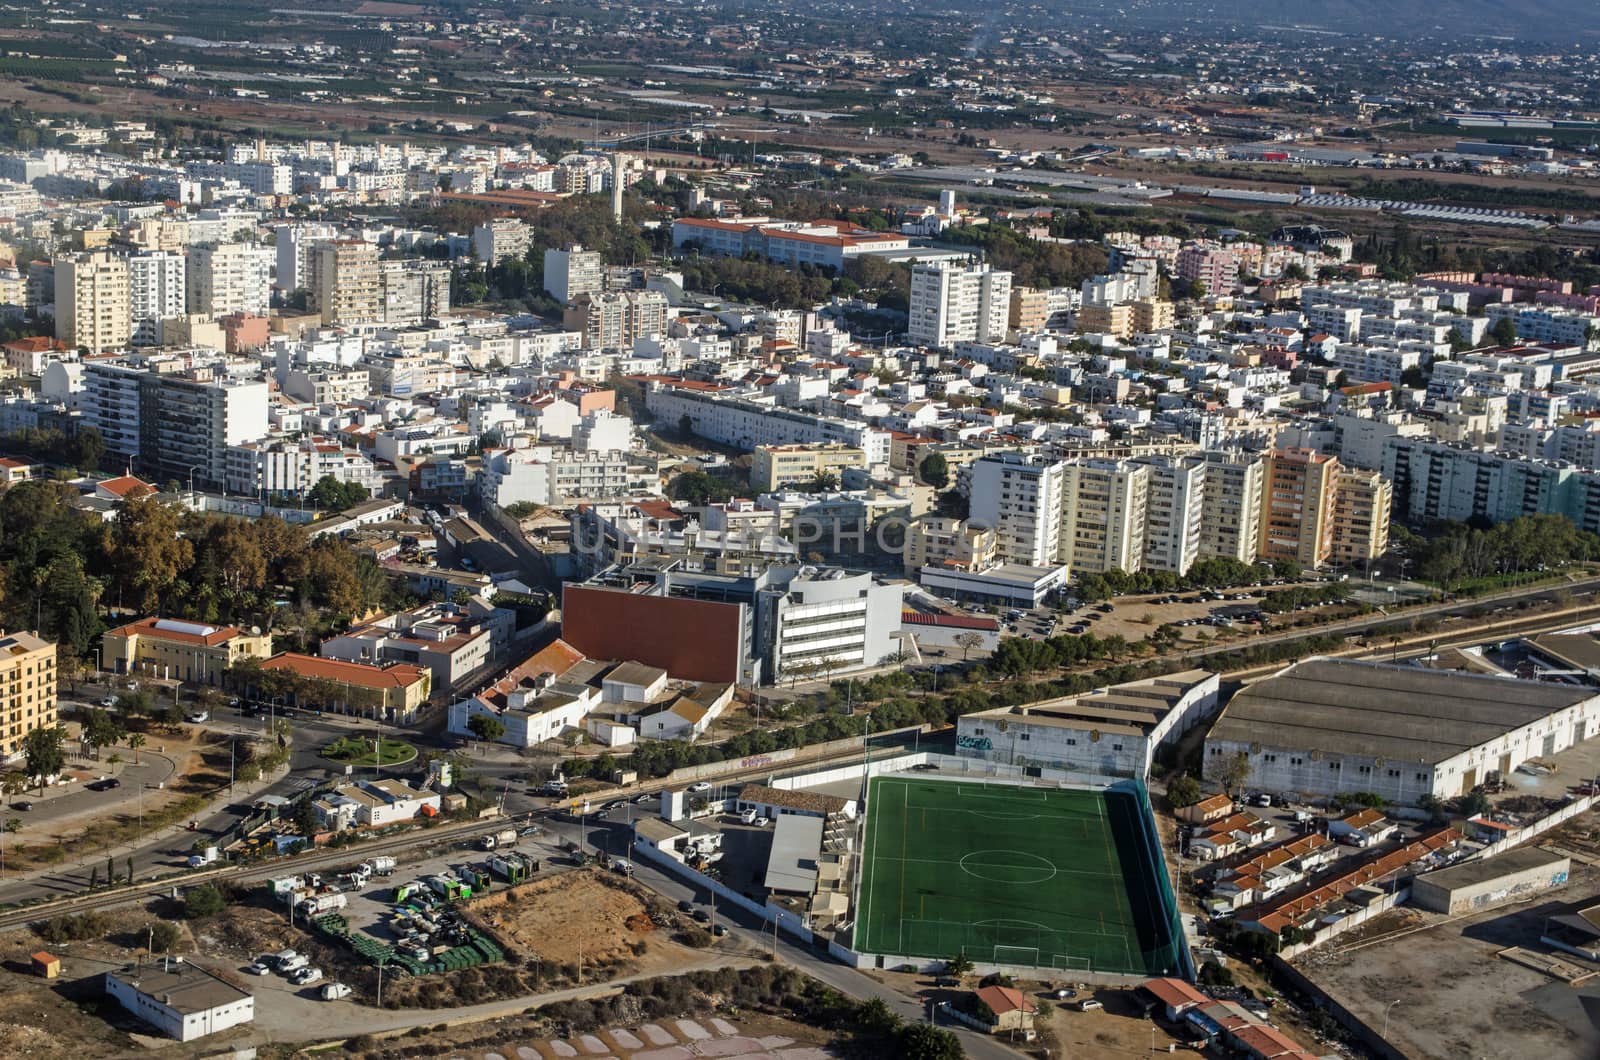 Football School, Faro - Aerial View by BasPhoto